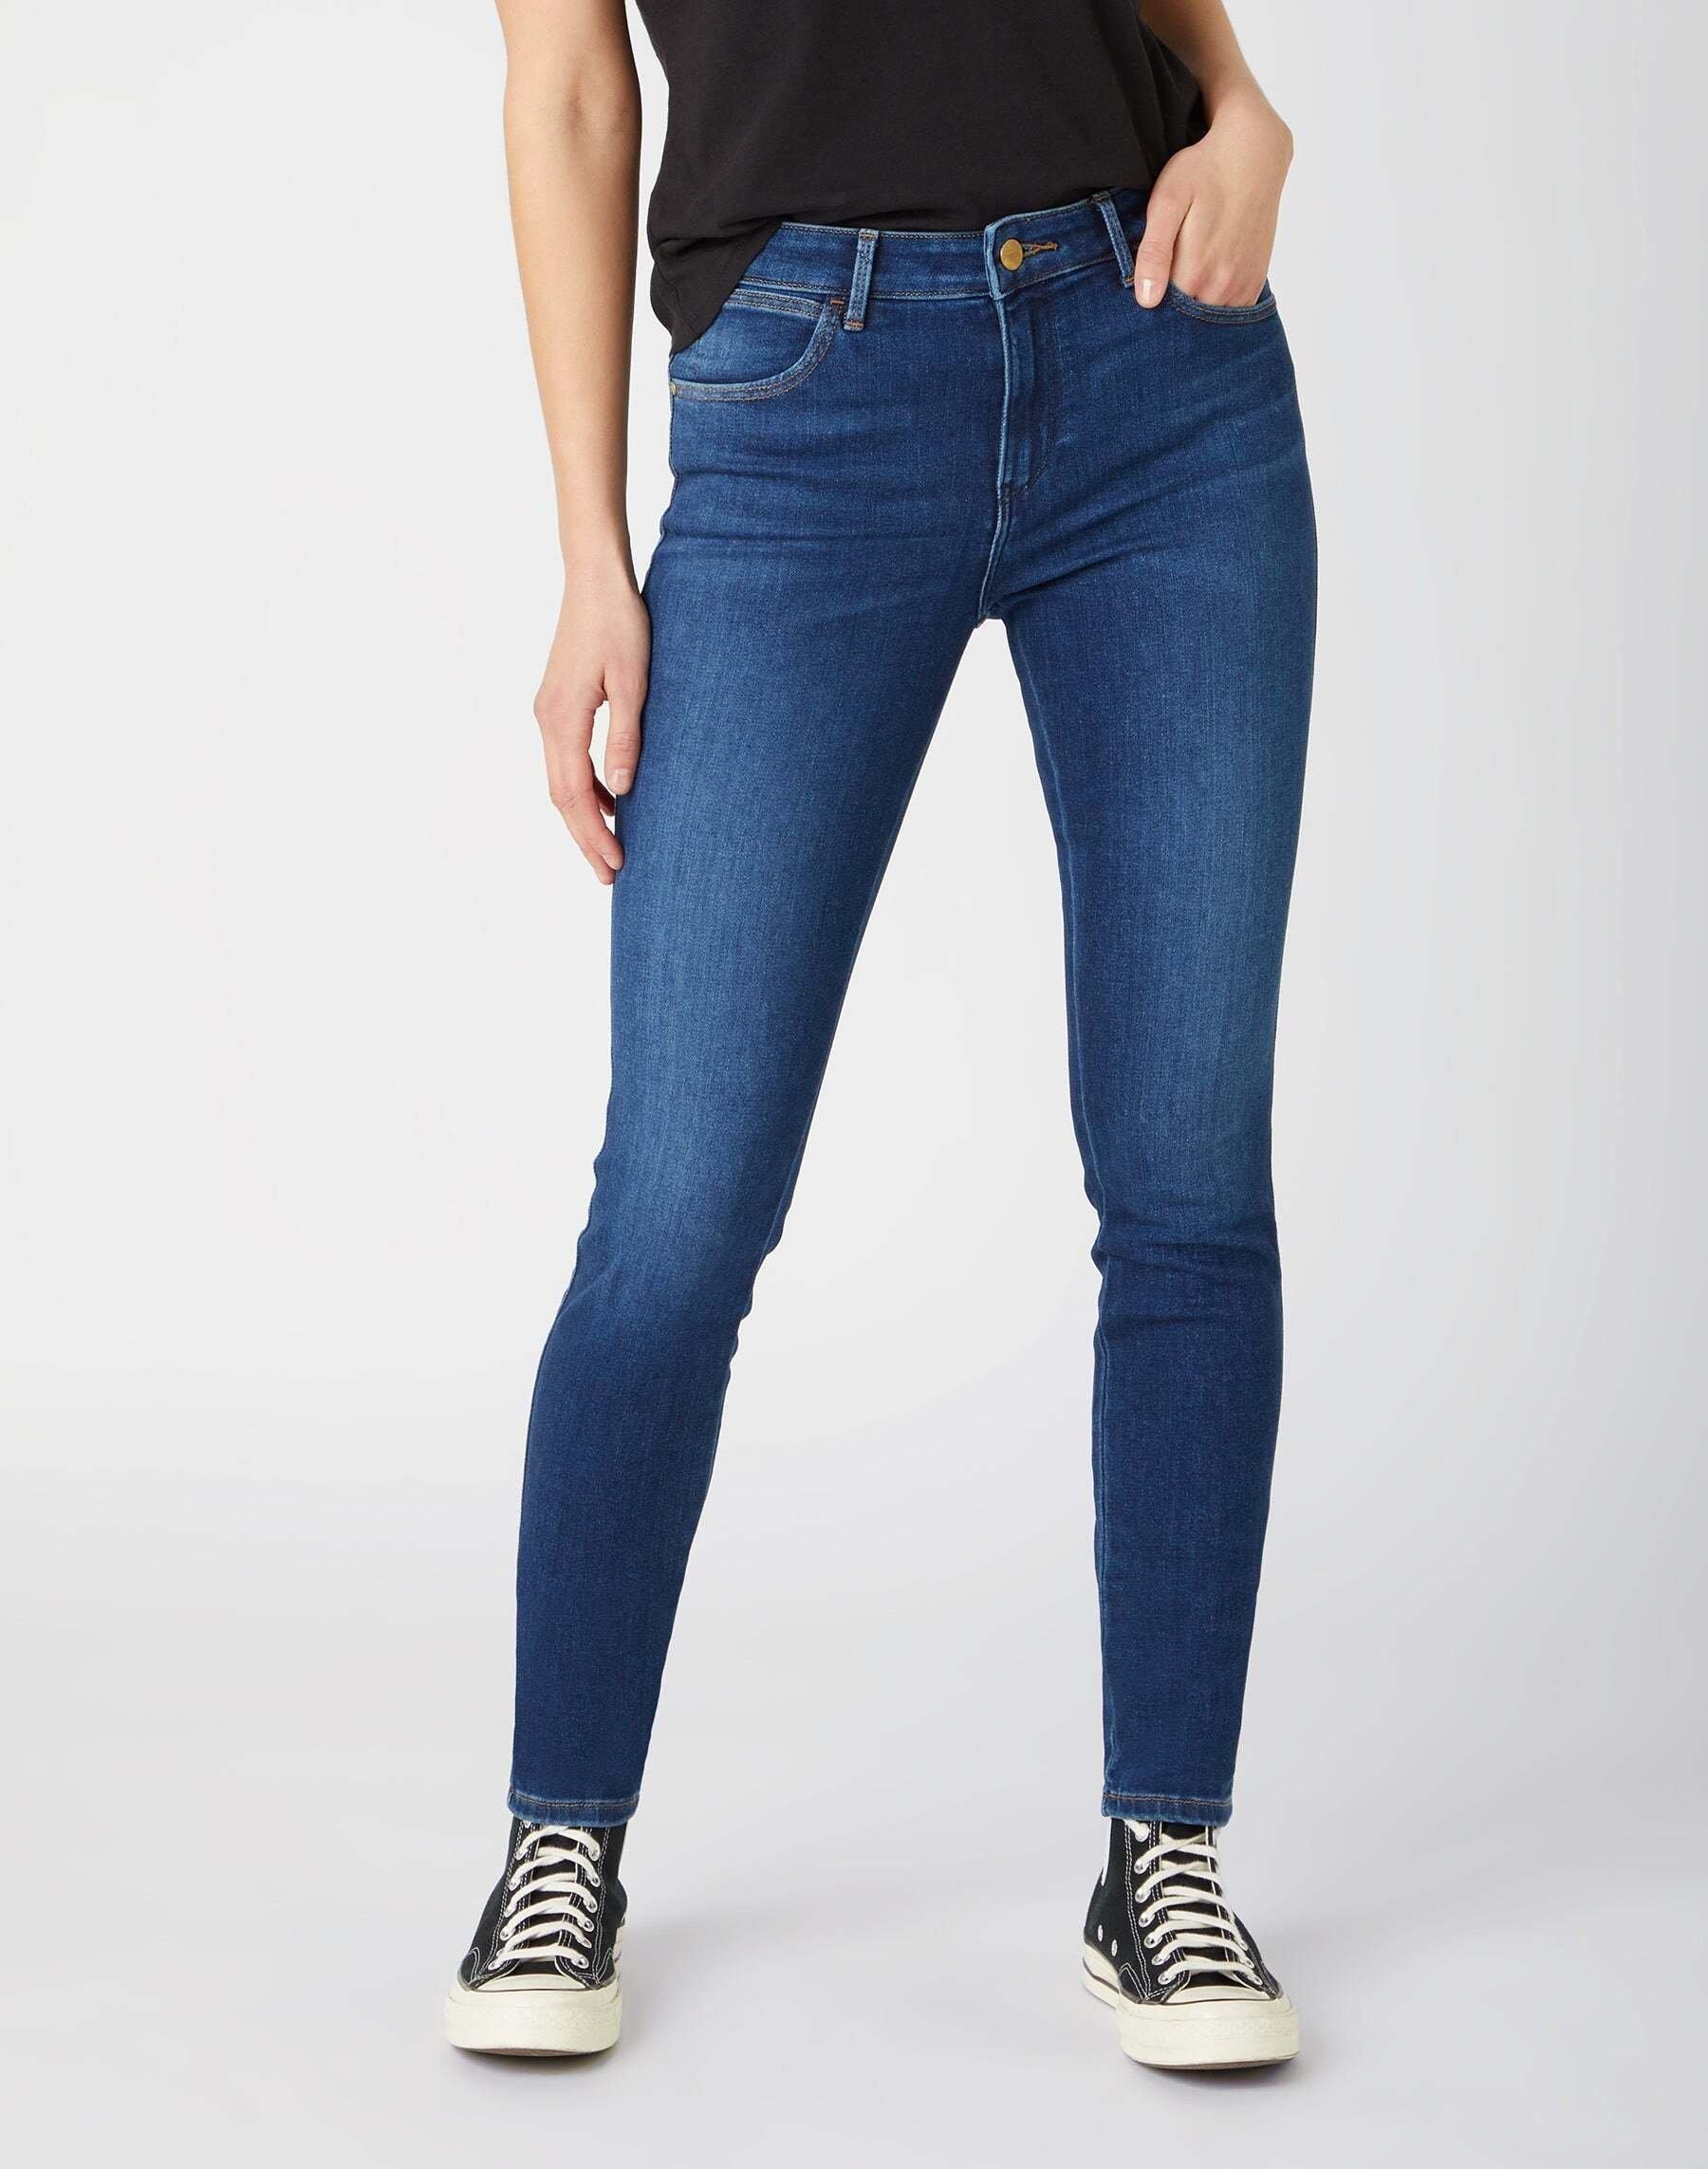 Jeans Skinny Fit Skinny Damen Blau Denim L32/W27 von Wrangler